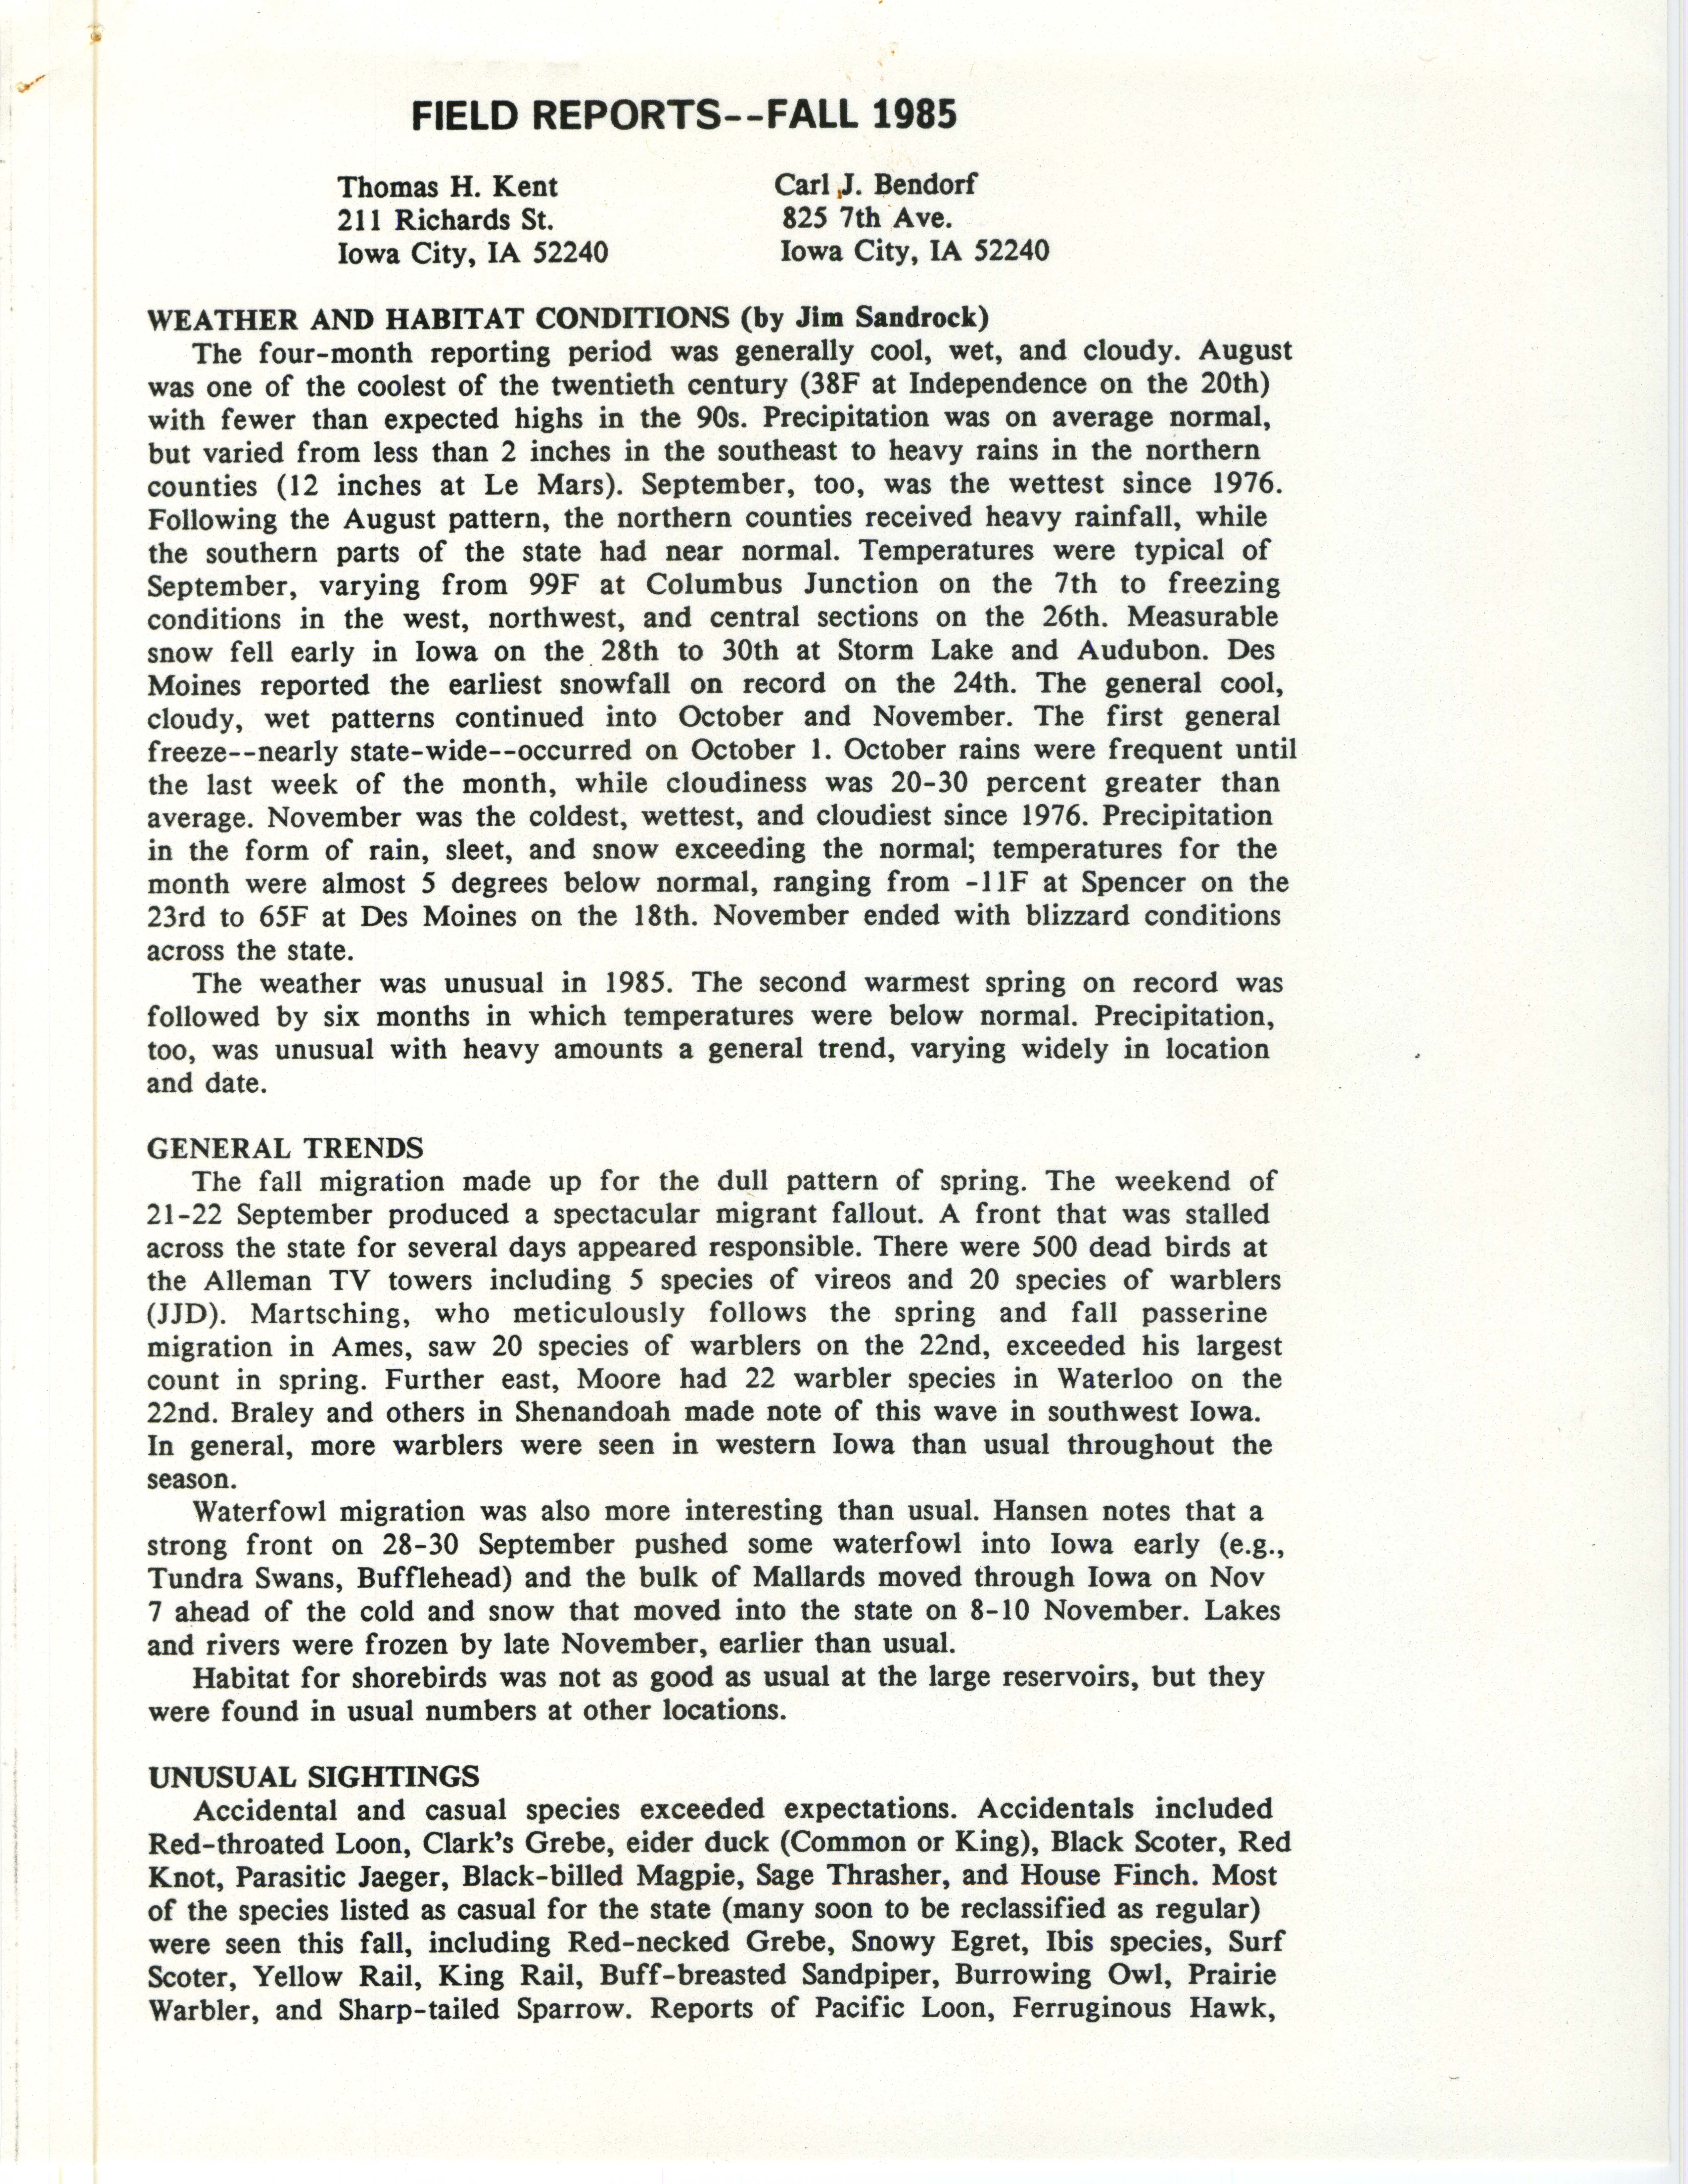 Iowa Ornithologists' Union, Quarterly field report, Fall 1985